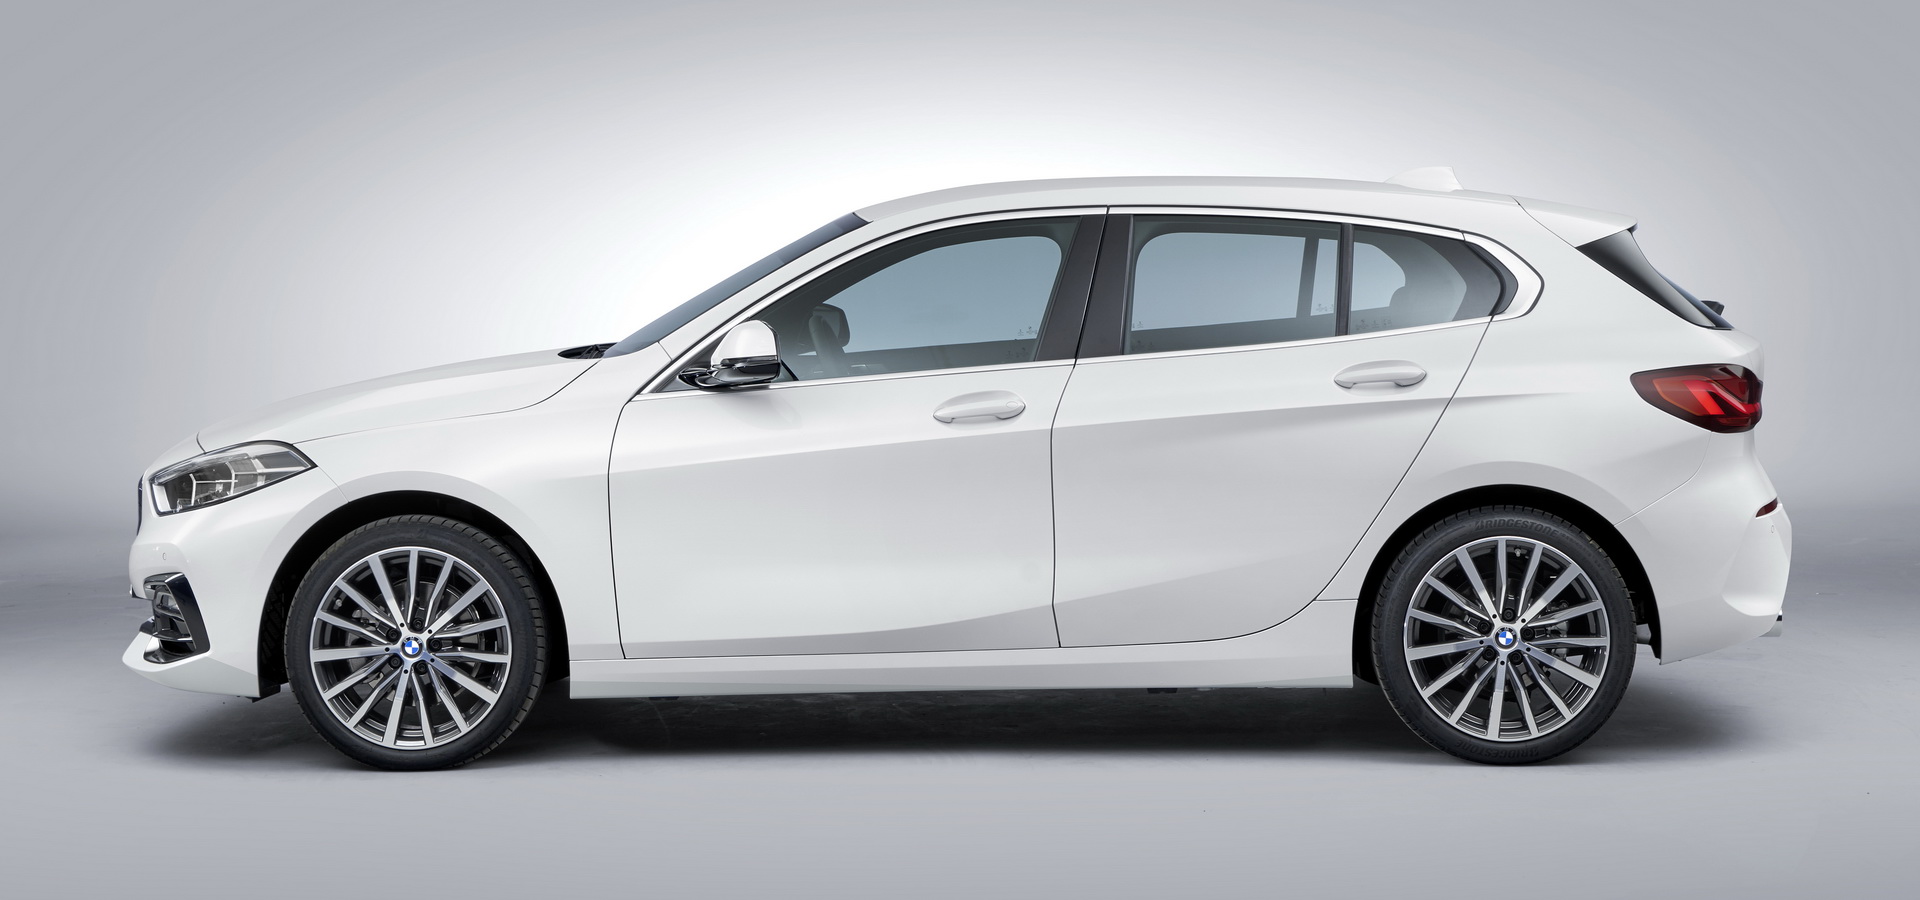 2020 BMW 1 Series Vs. Mercedes AClass Which Premium